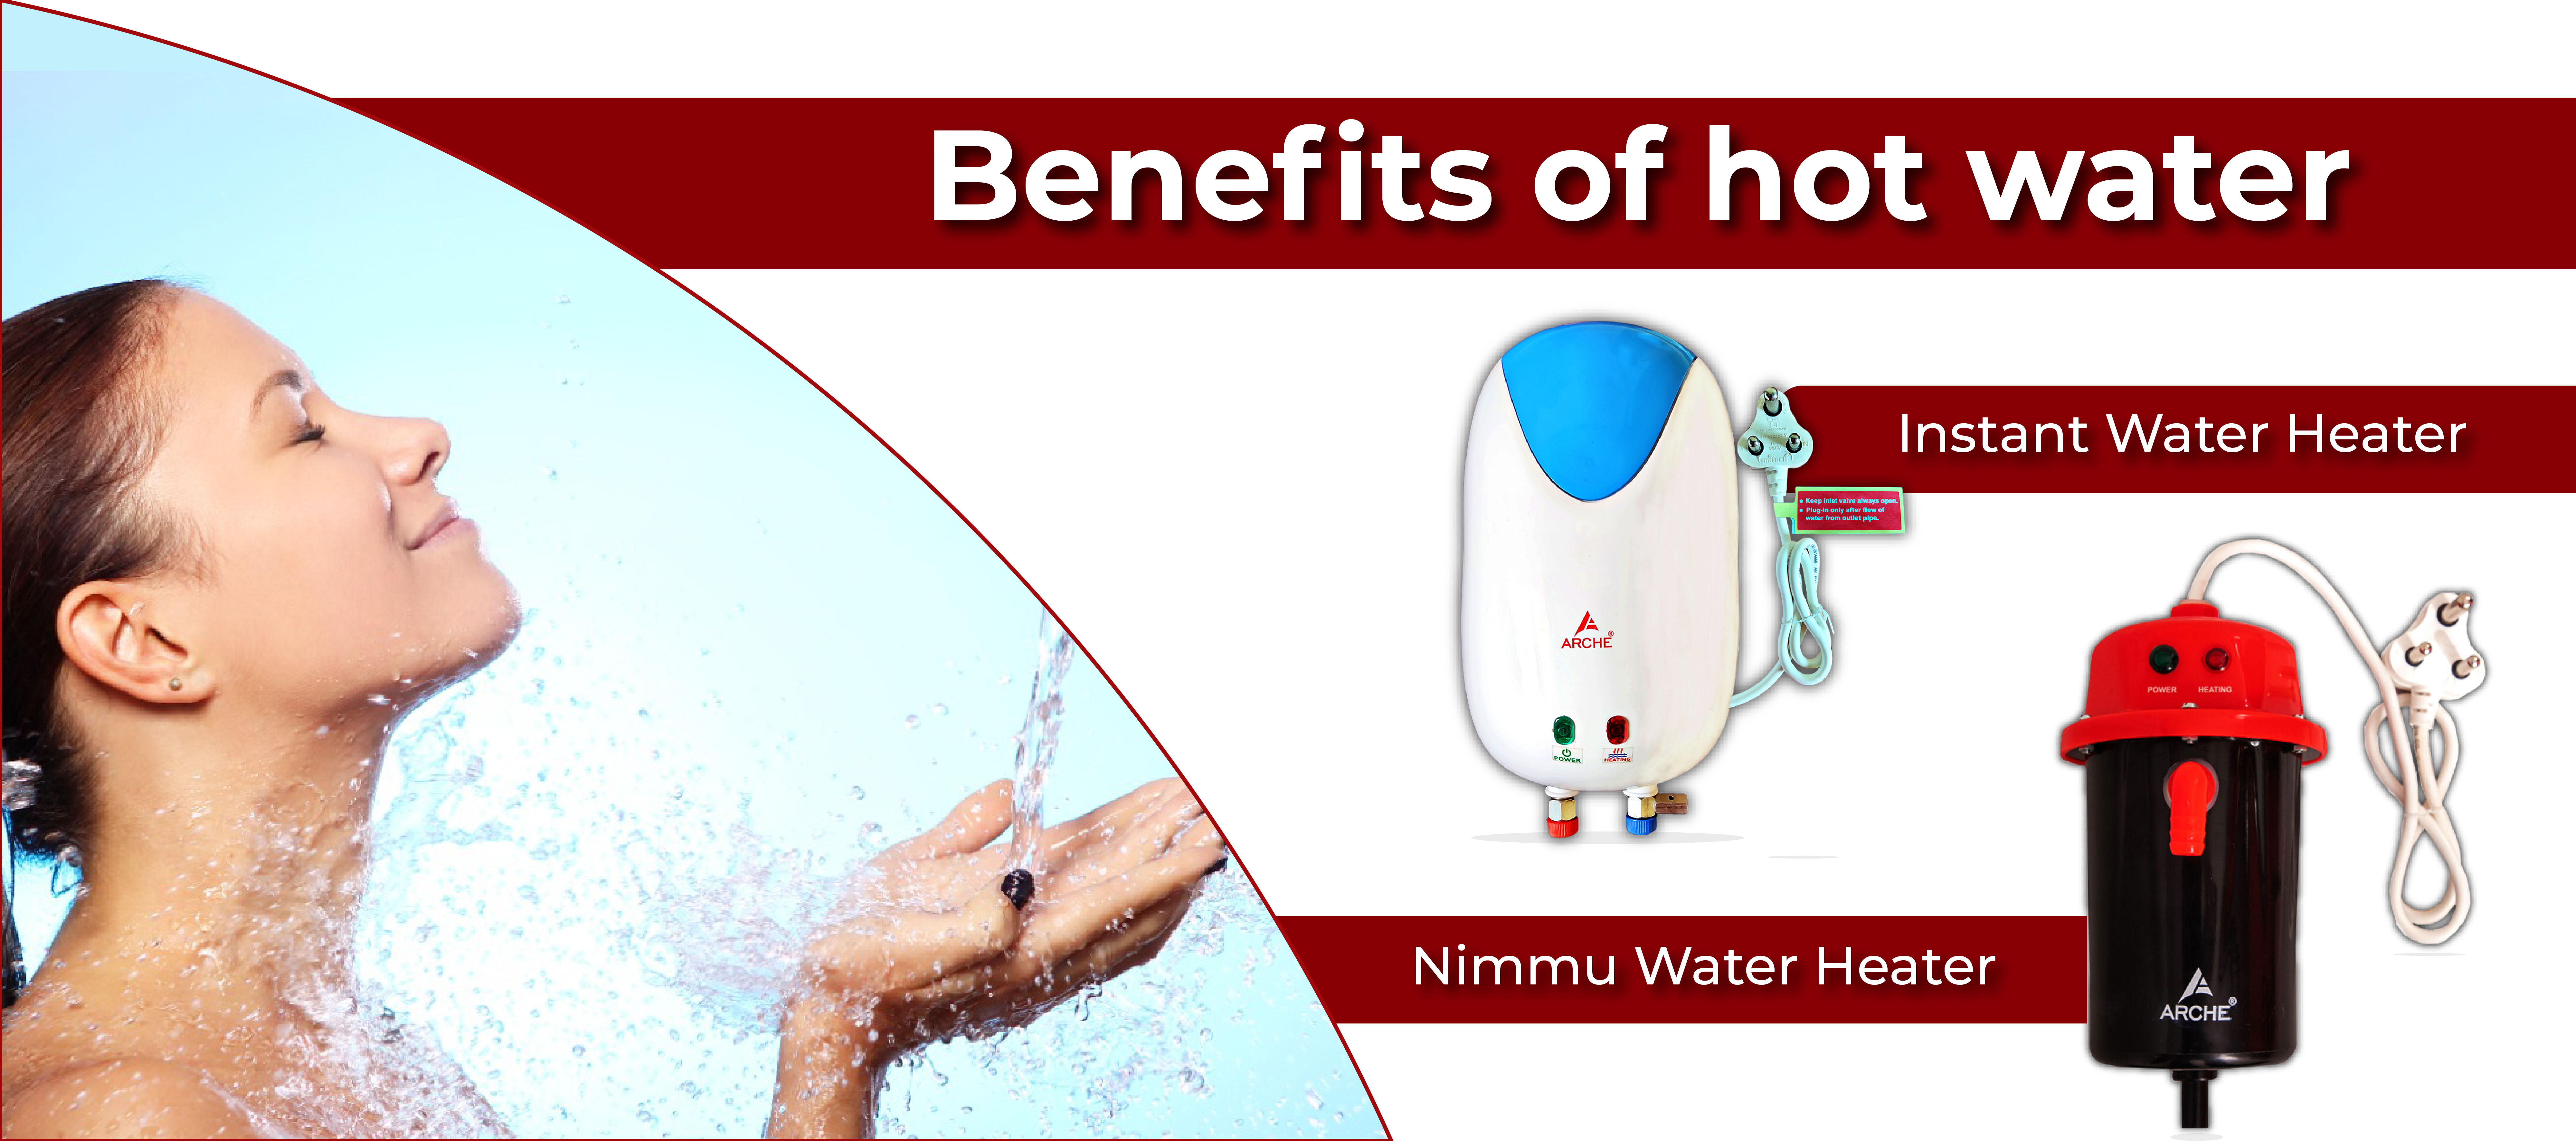 Benefits of Hot Water